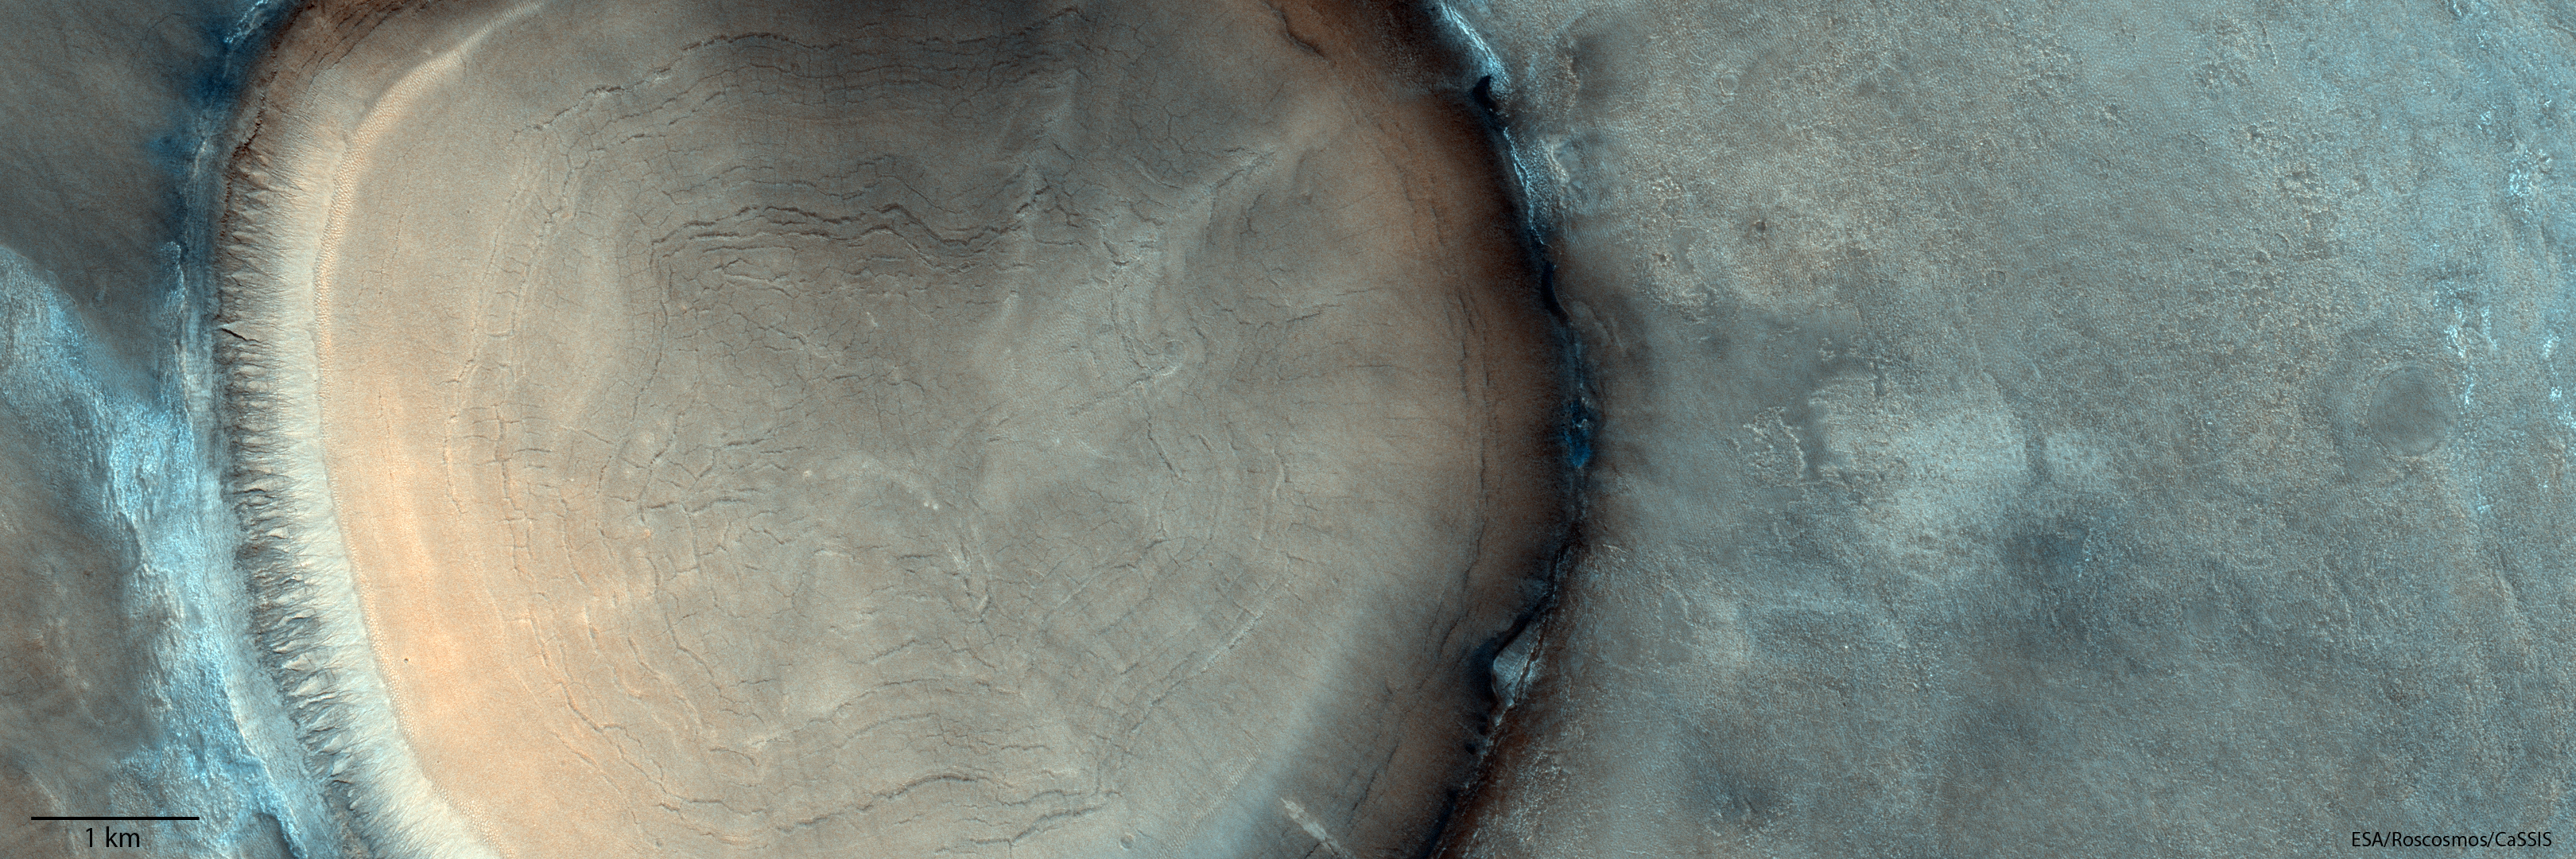 Ломоносов (Марсианский кратер)